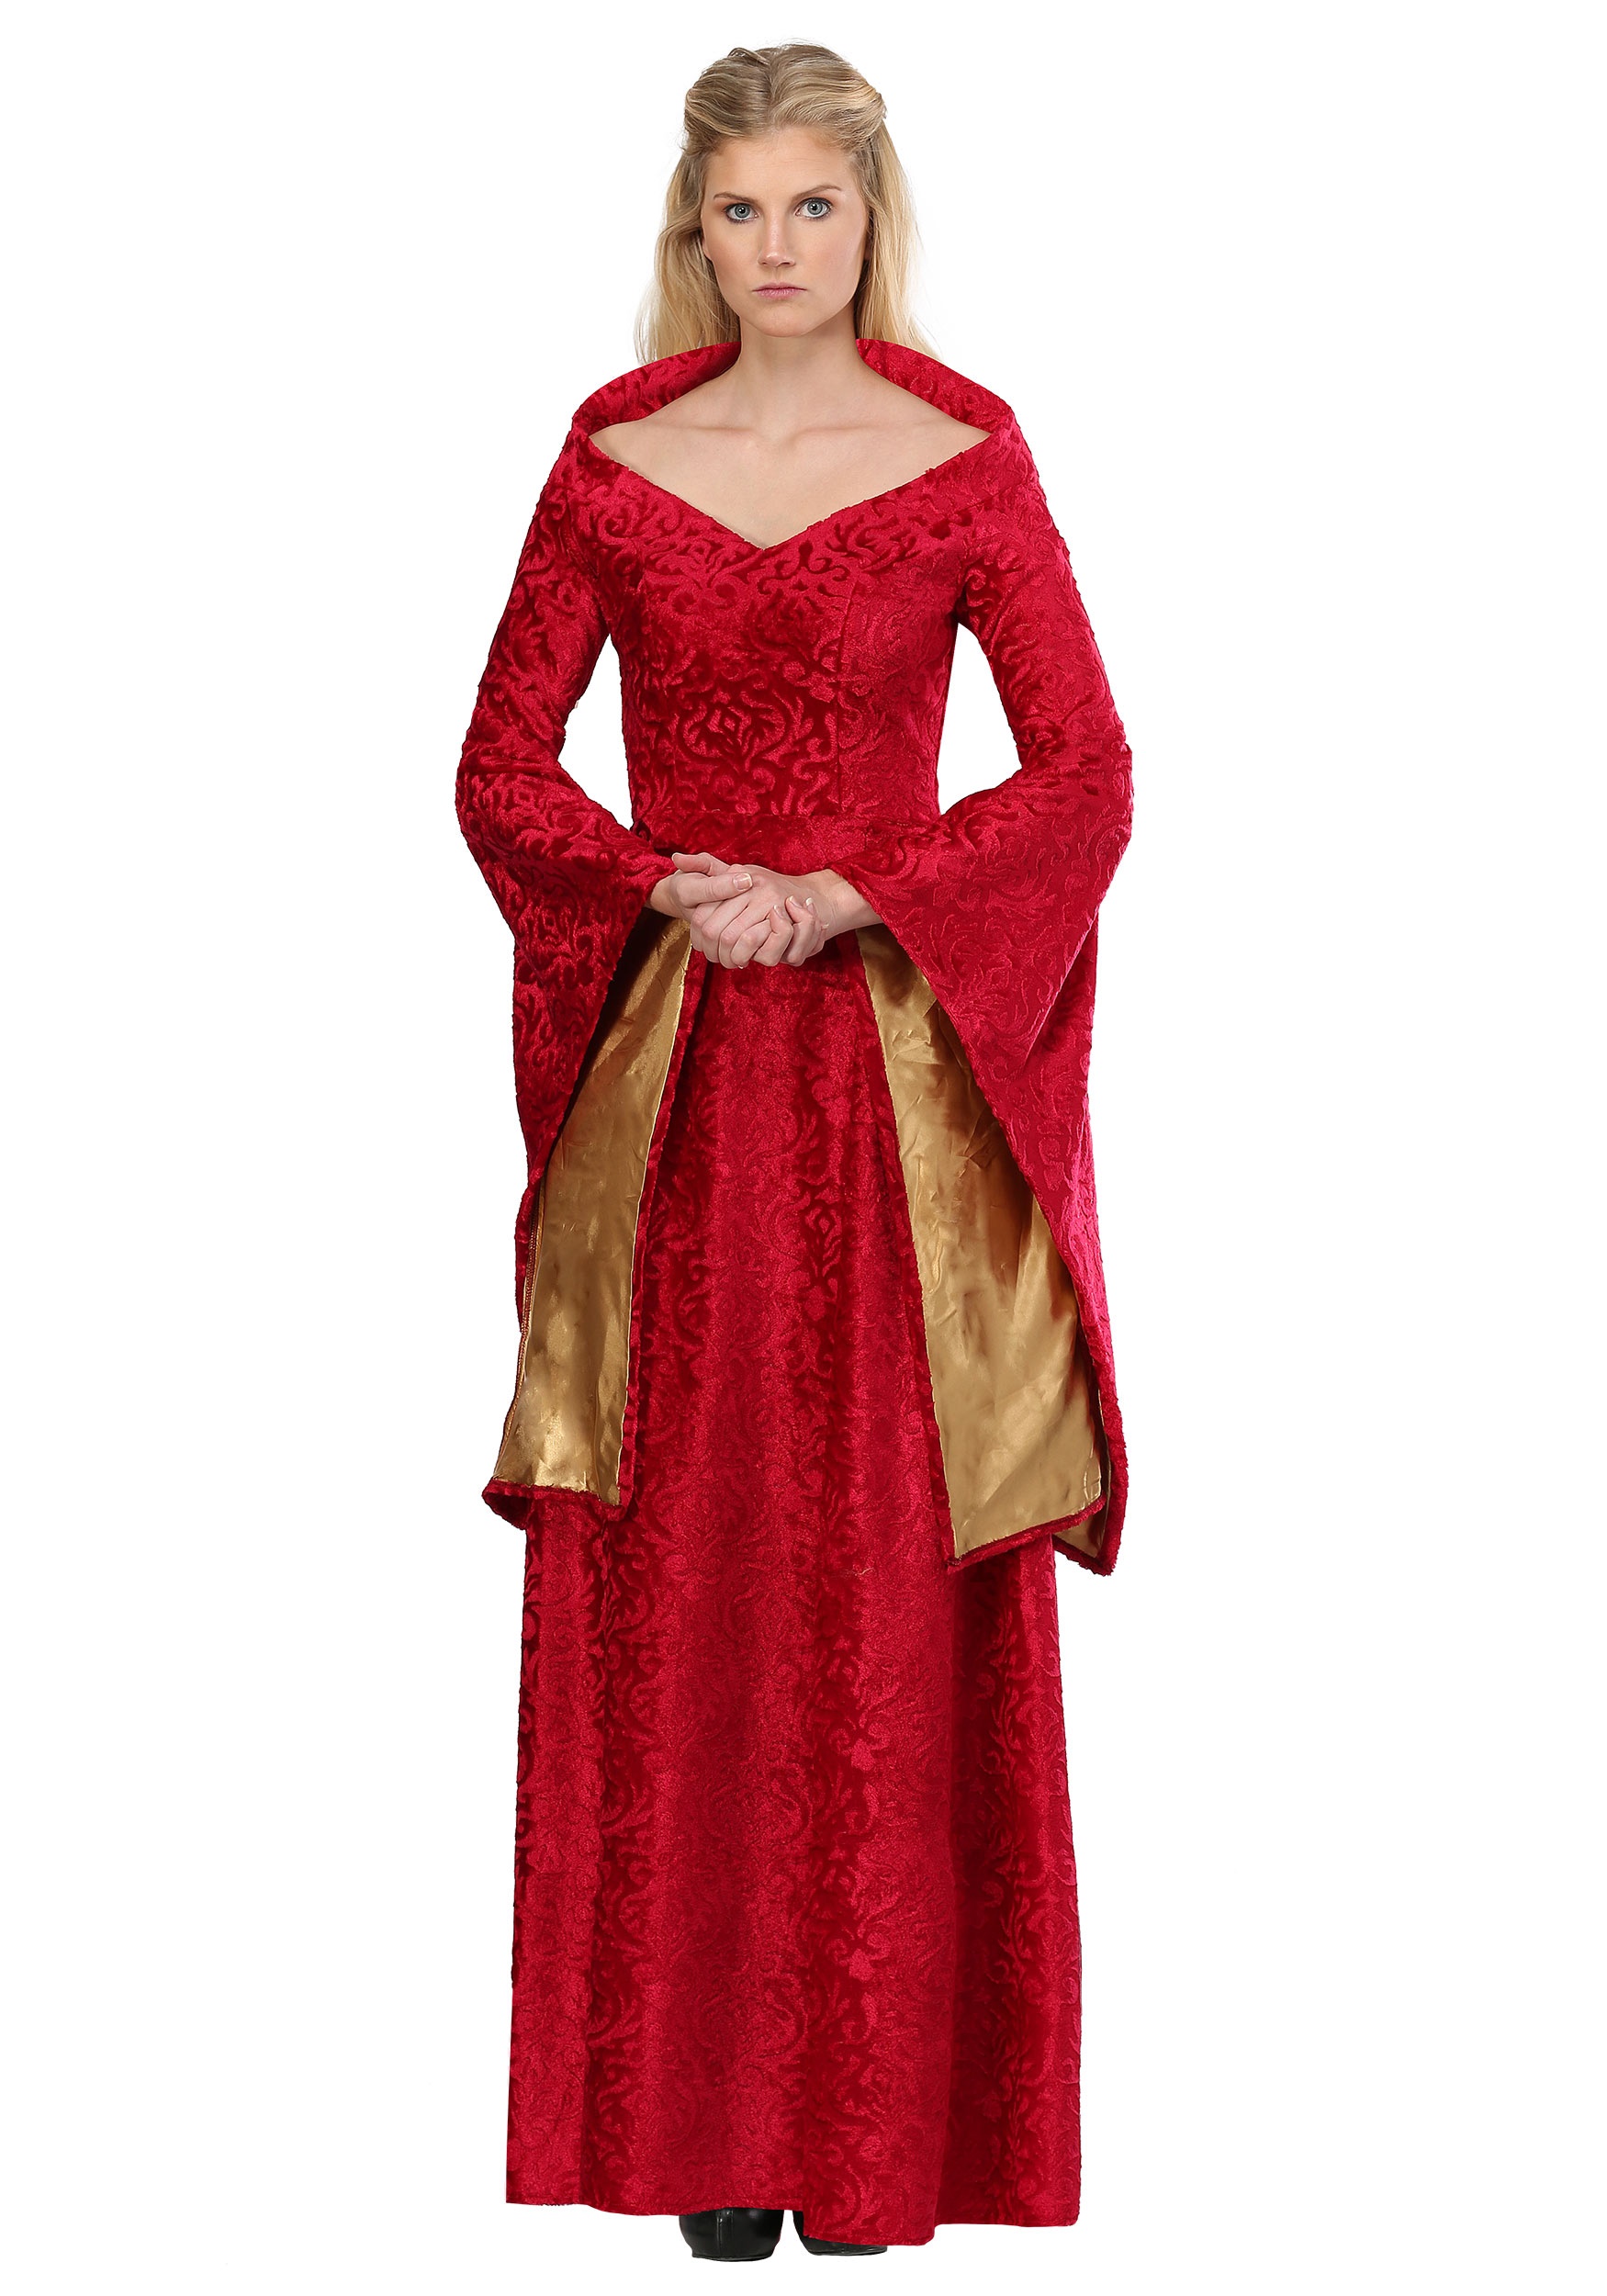 Plus Size Lion Queen Women's Fancy Dress Costume